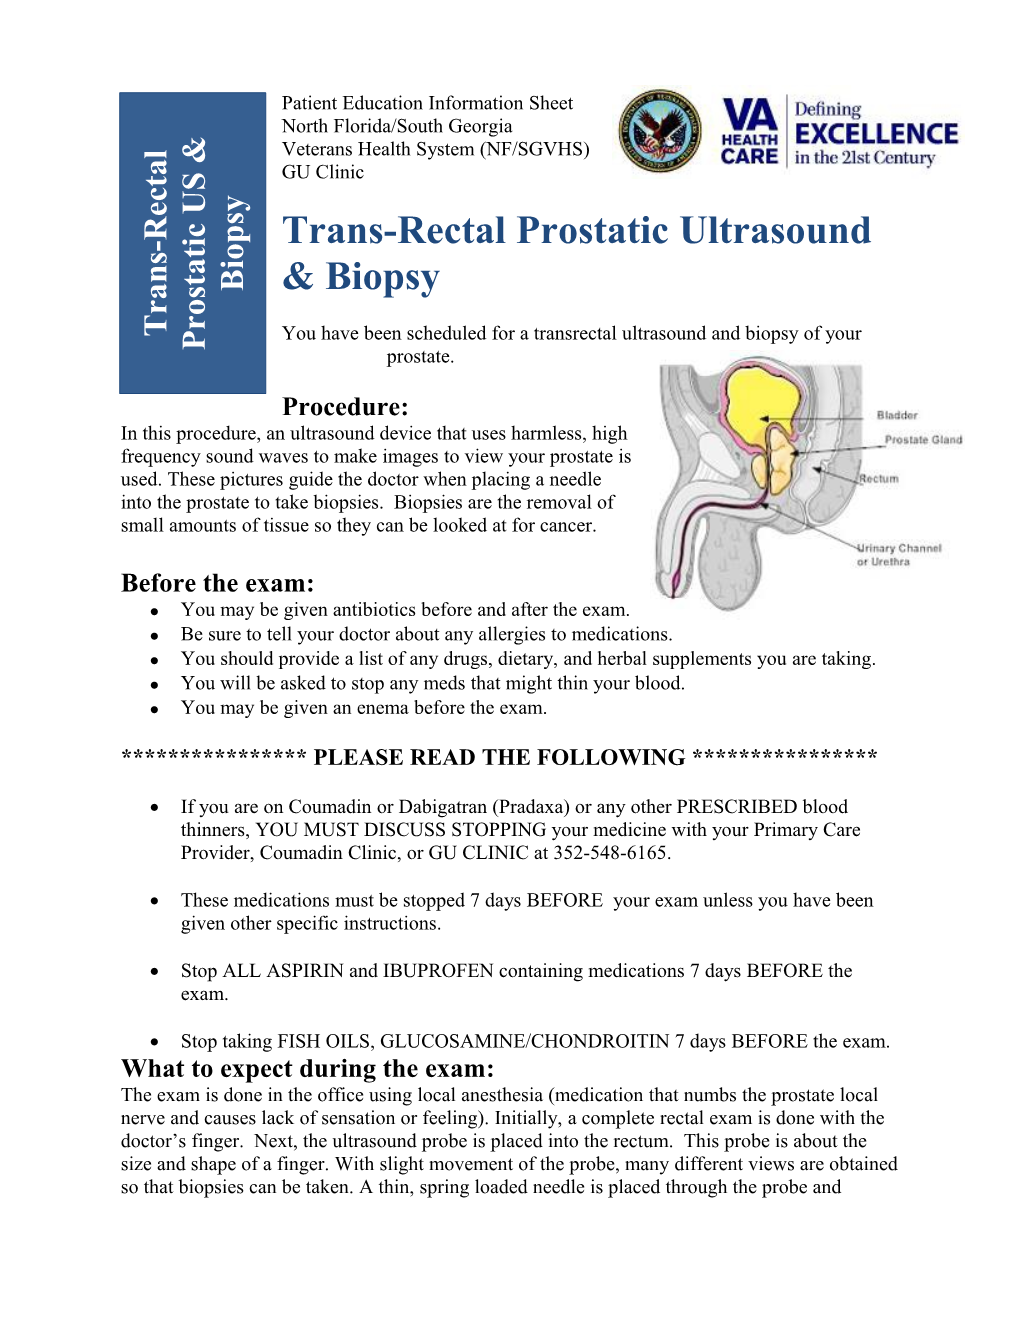 Trans-Rectal Prostatic US & Biopsy